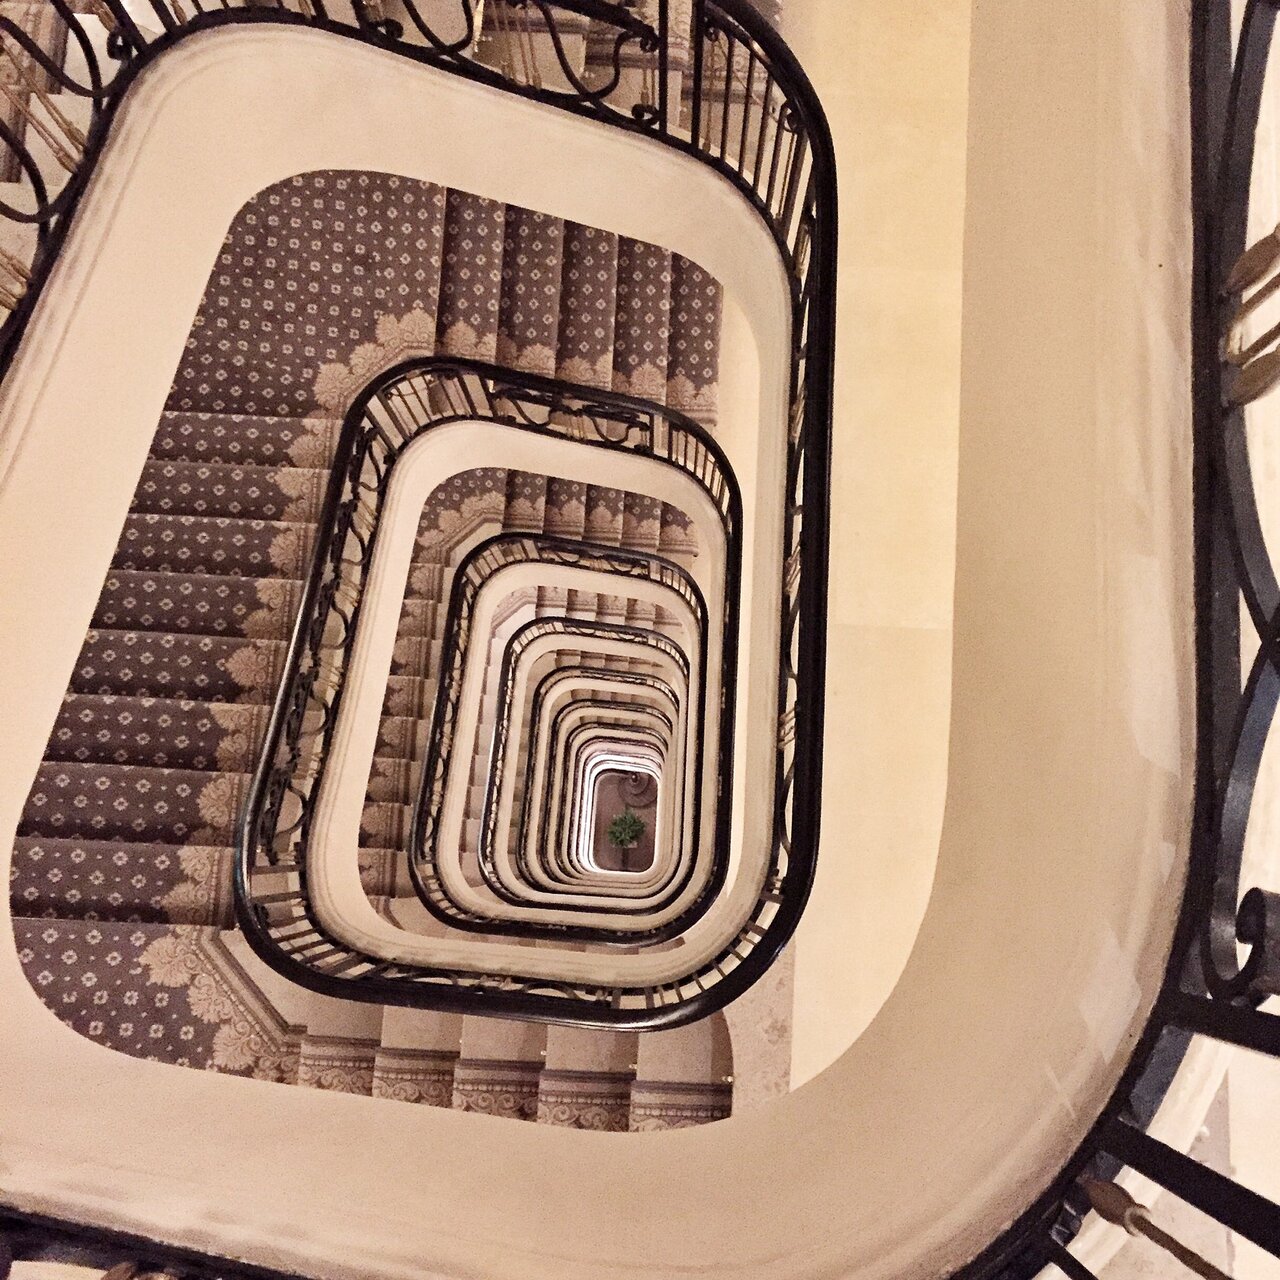 RT @_Nathan_Lewis_: Bungee Line.... #Parisian Staircases @FSParis #FourSeasons #Paris #LuxuryHotels #Staircase #Travel #Lifestyle https://t.co/Awc7e05mHk